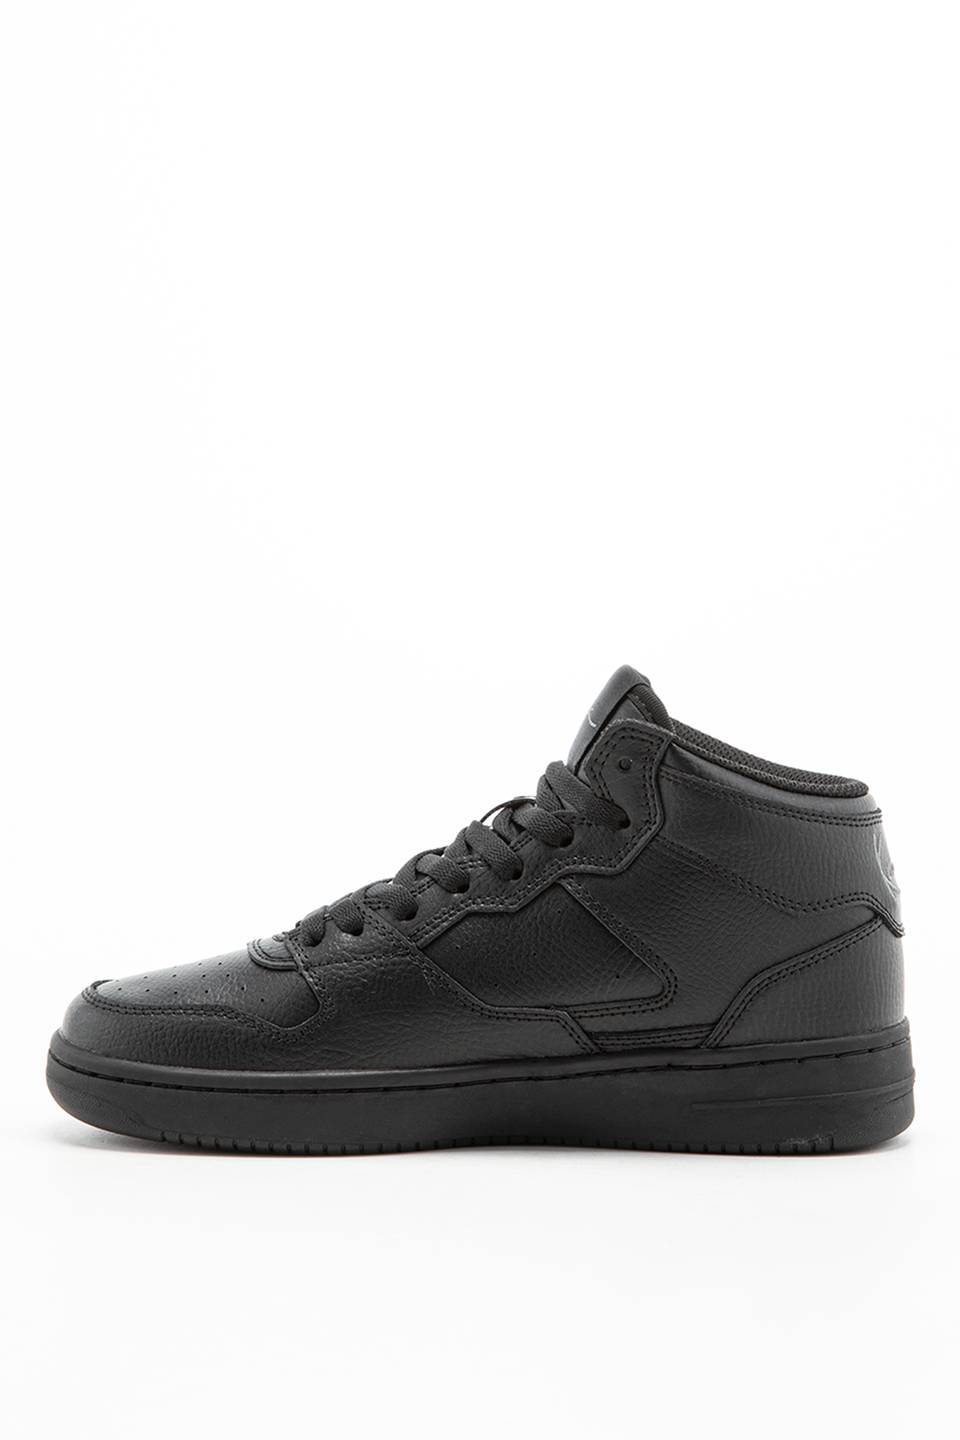 Sneakers Karl Kani 89 High PRM black/grey 1080128